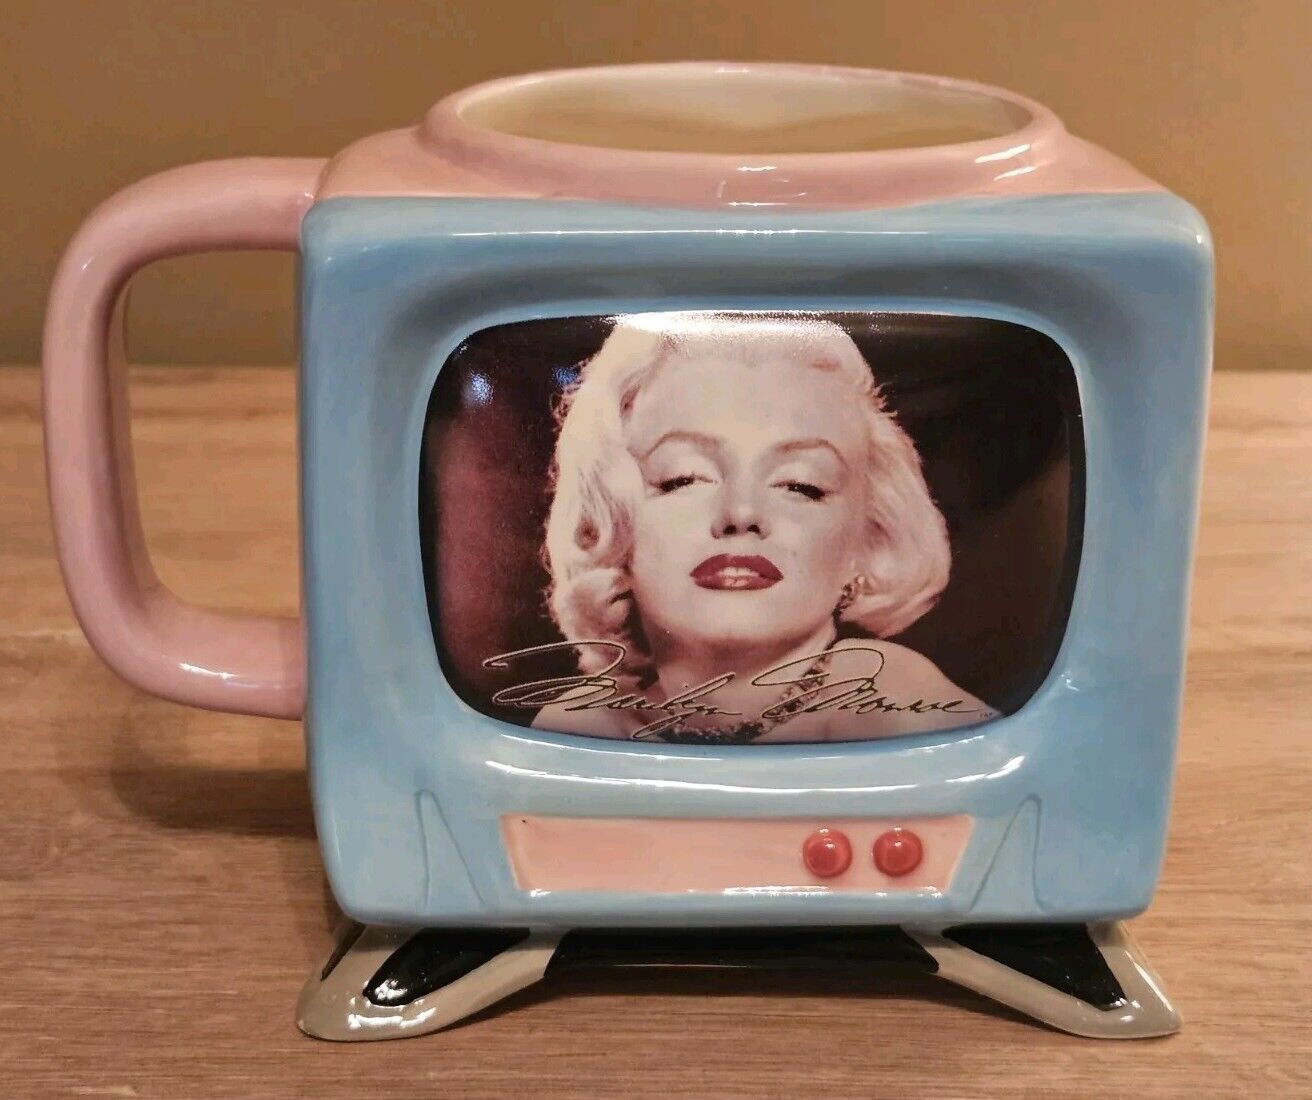 New In Box Marilyn Monroe Collective TV Mug By Vandor Very Rare & Retired 2001